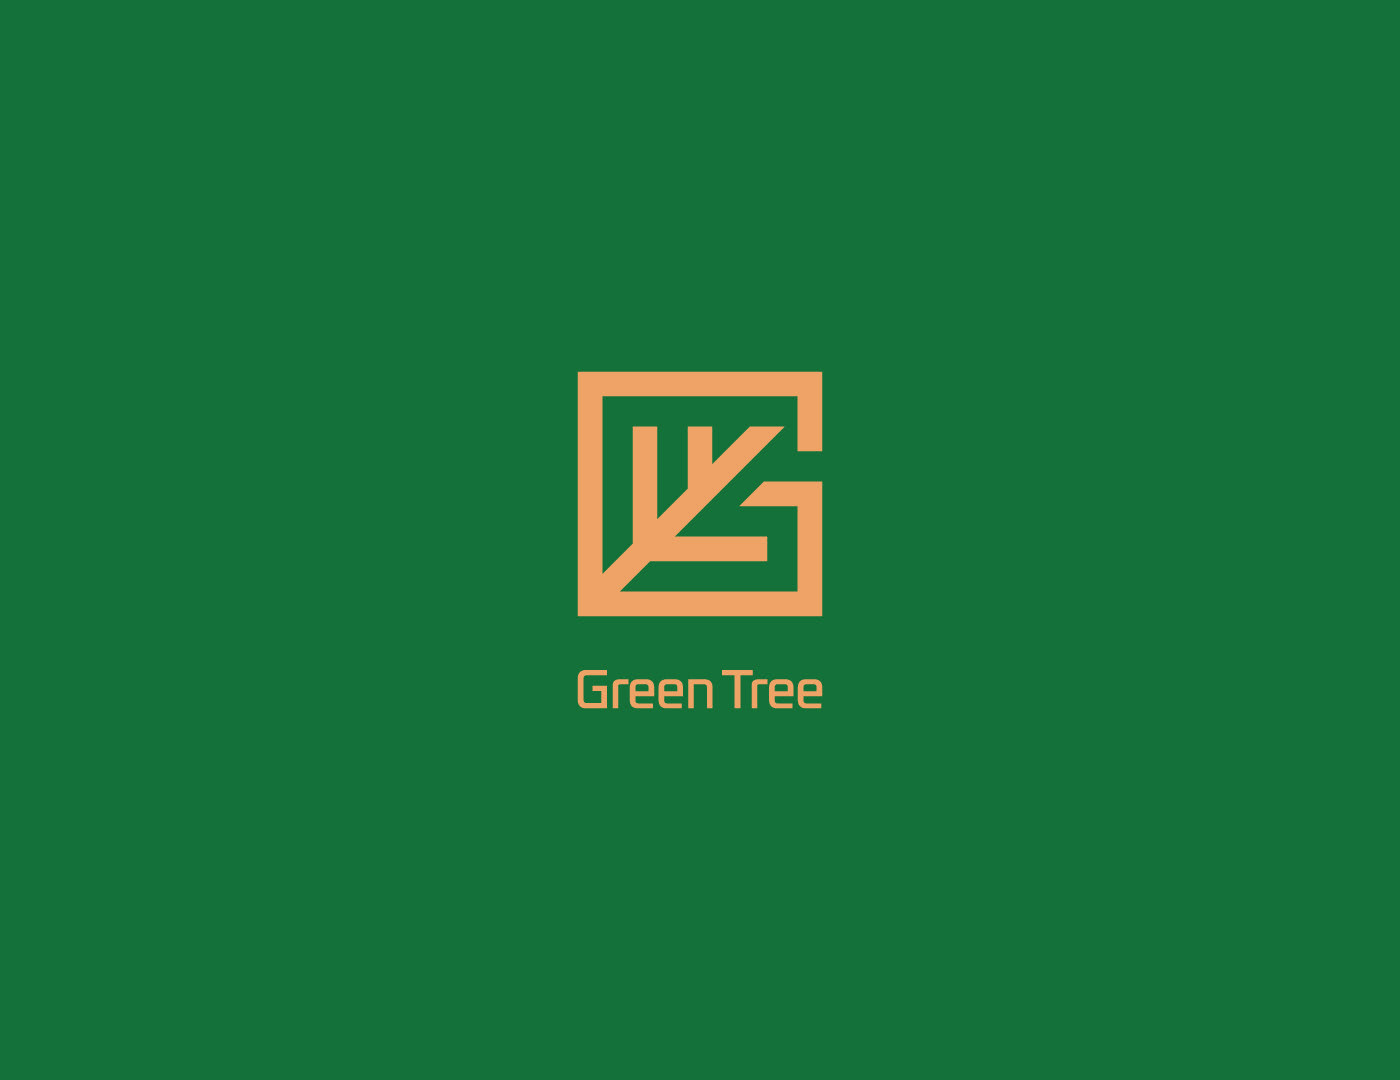 Non-profit organization logo and branding design